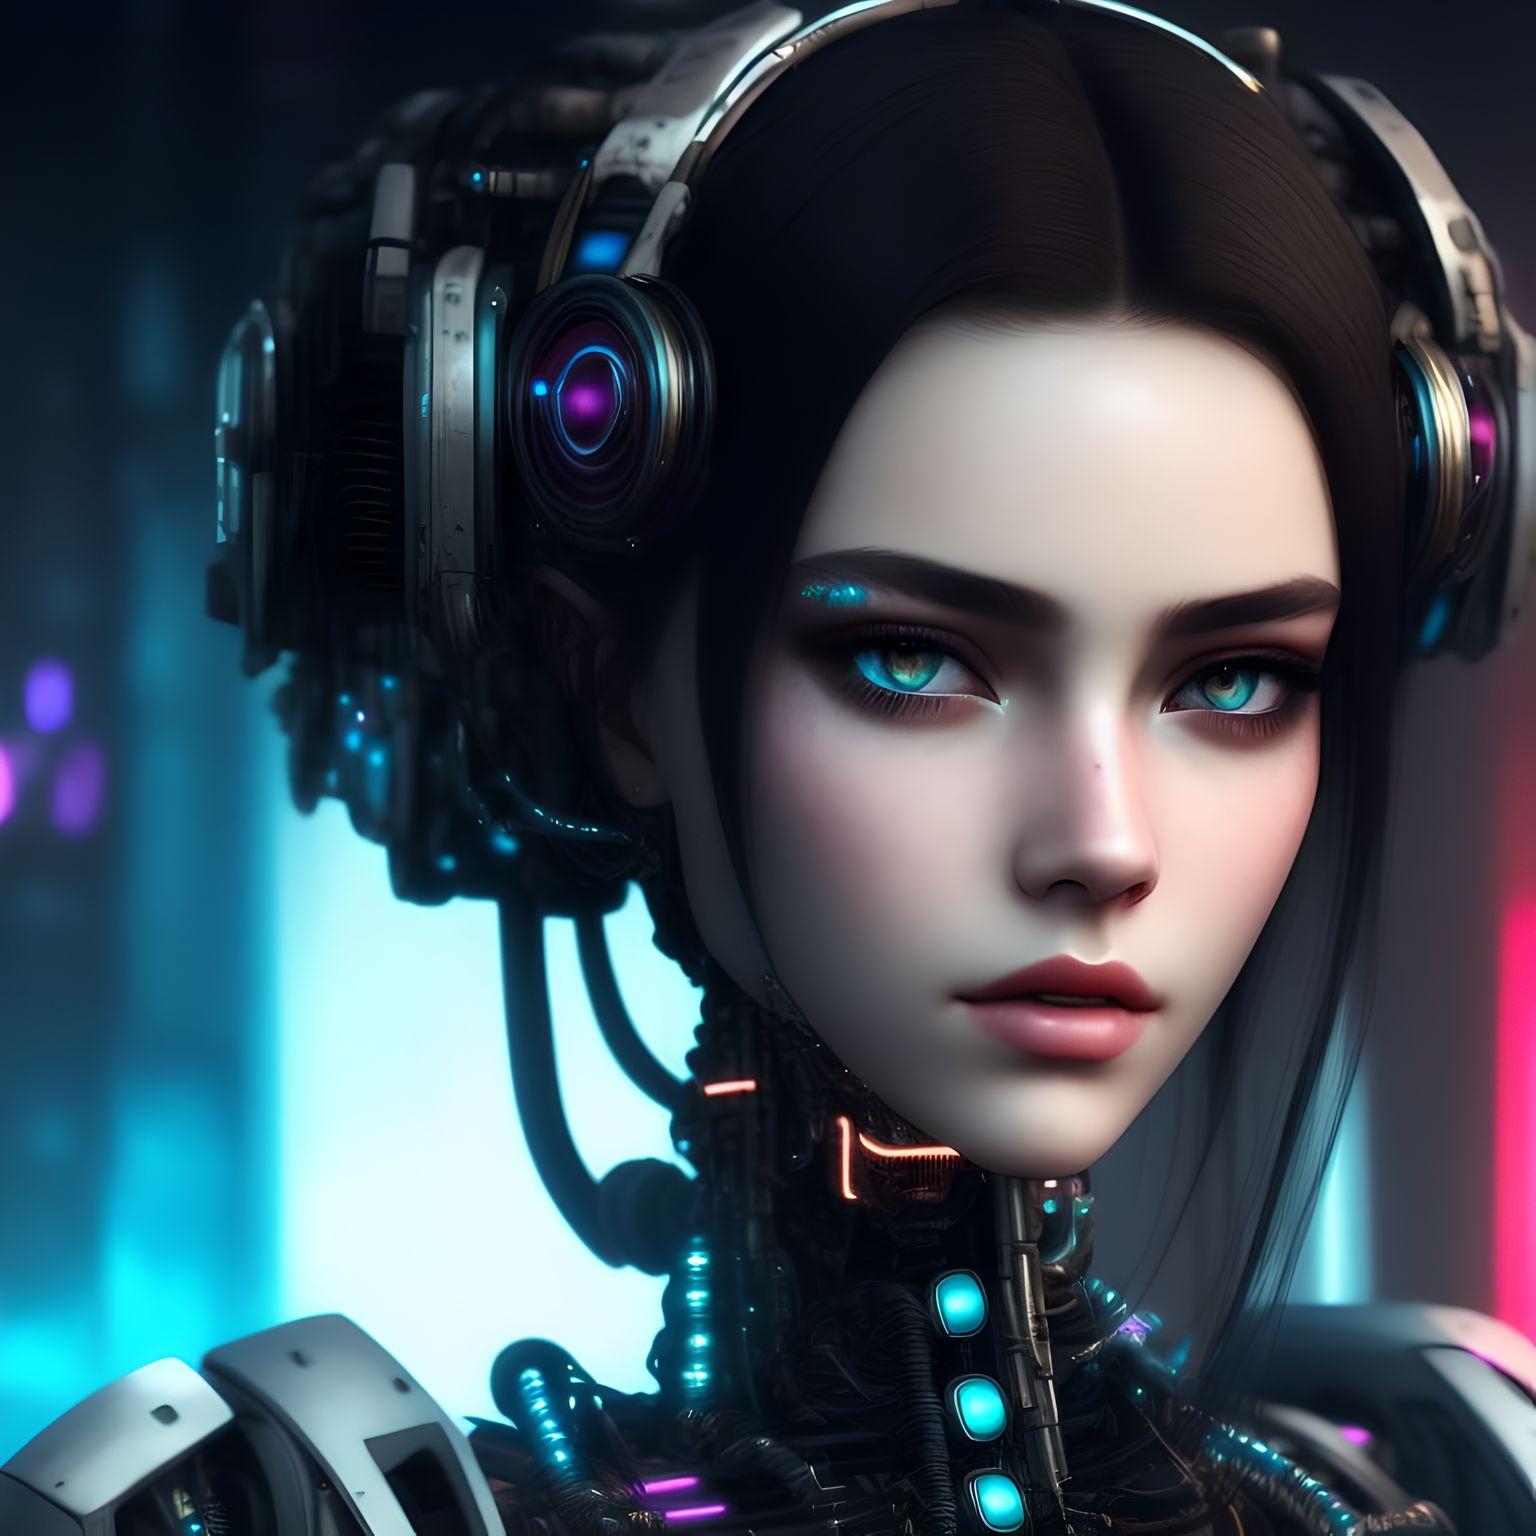 A beautiful girl in mechanical cyberpunk style